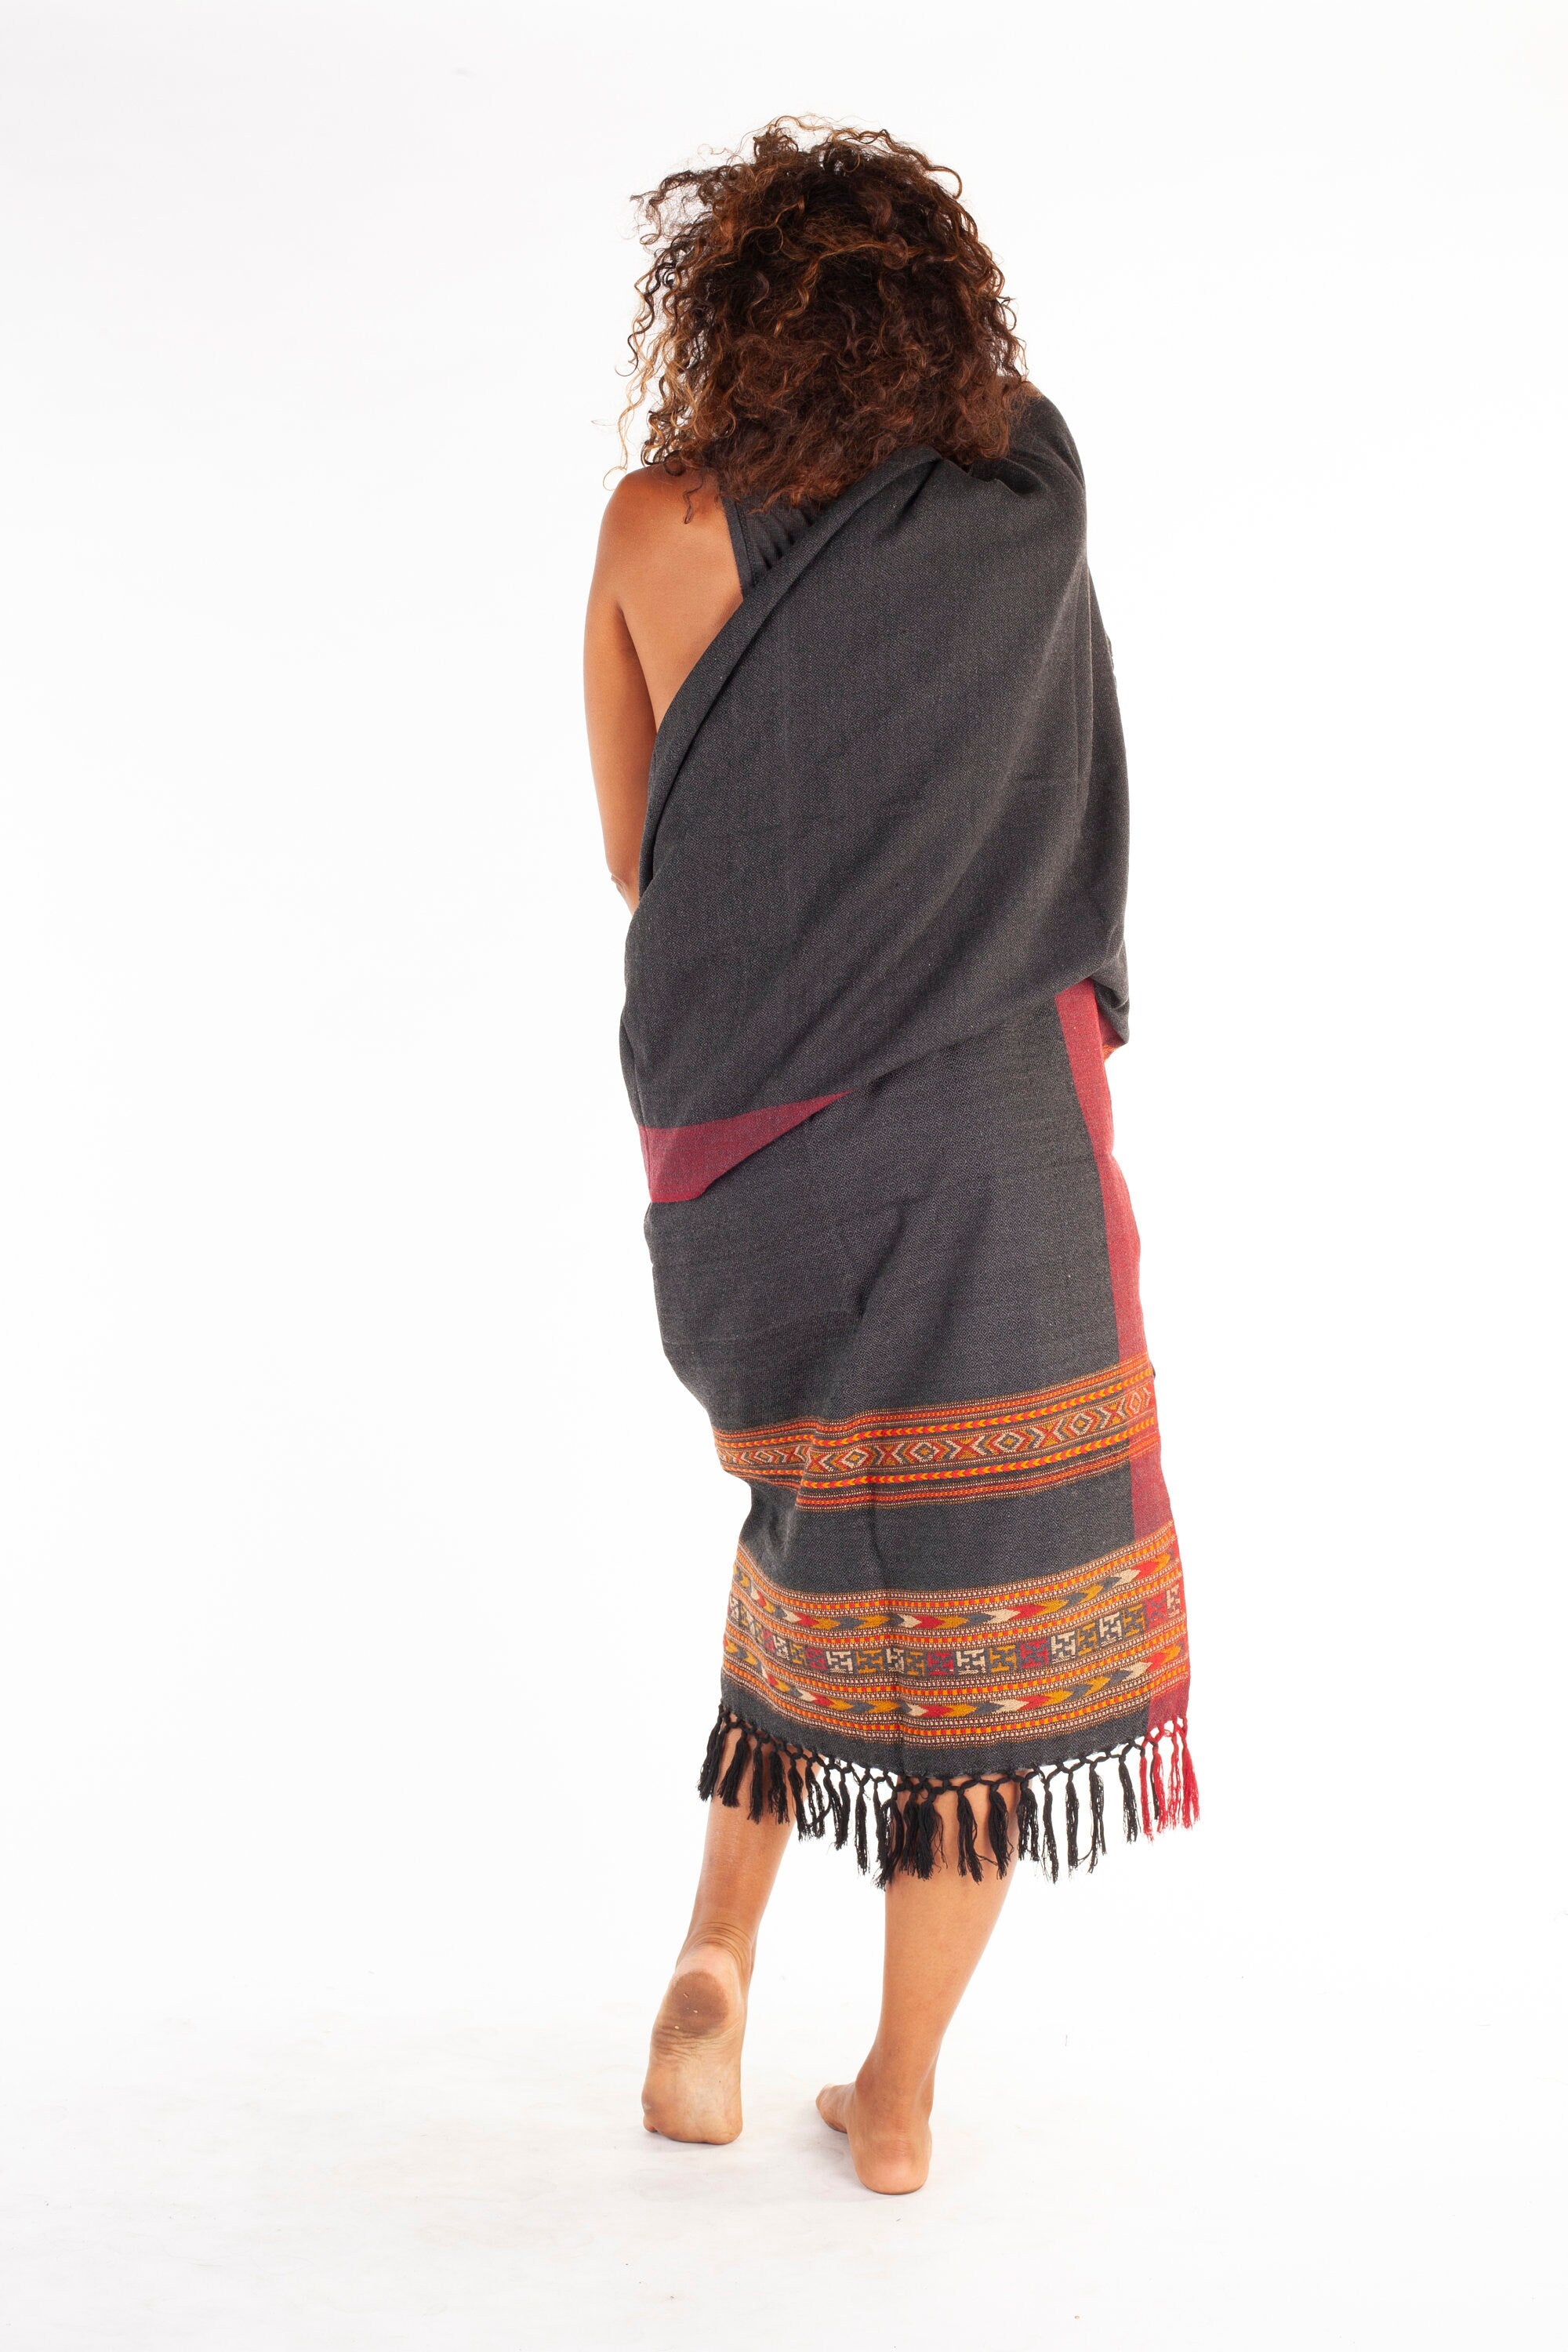 Handmade Cashmere Shawl Dark Grey wool Bohemian, nomadic embroidery AJJAYA wrap blanket Tribal Gypsy Boho Primitive Festival embroidered